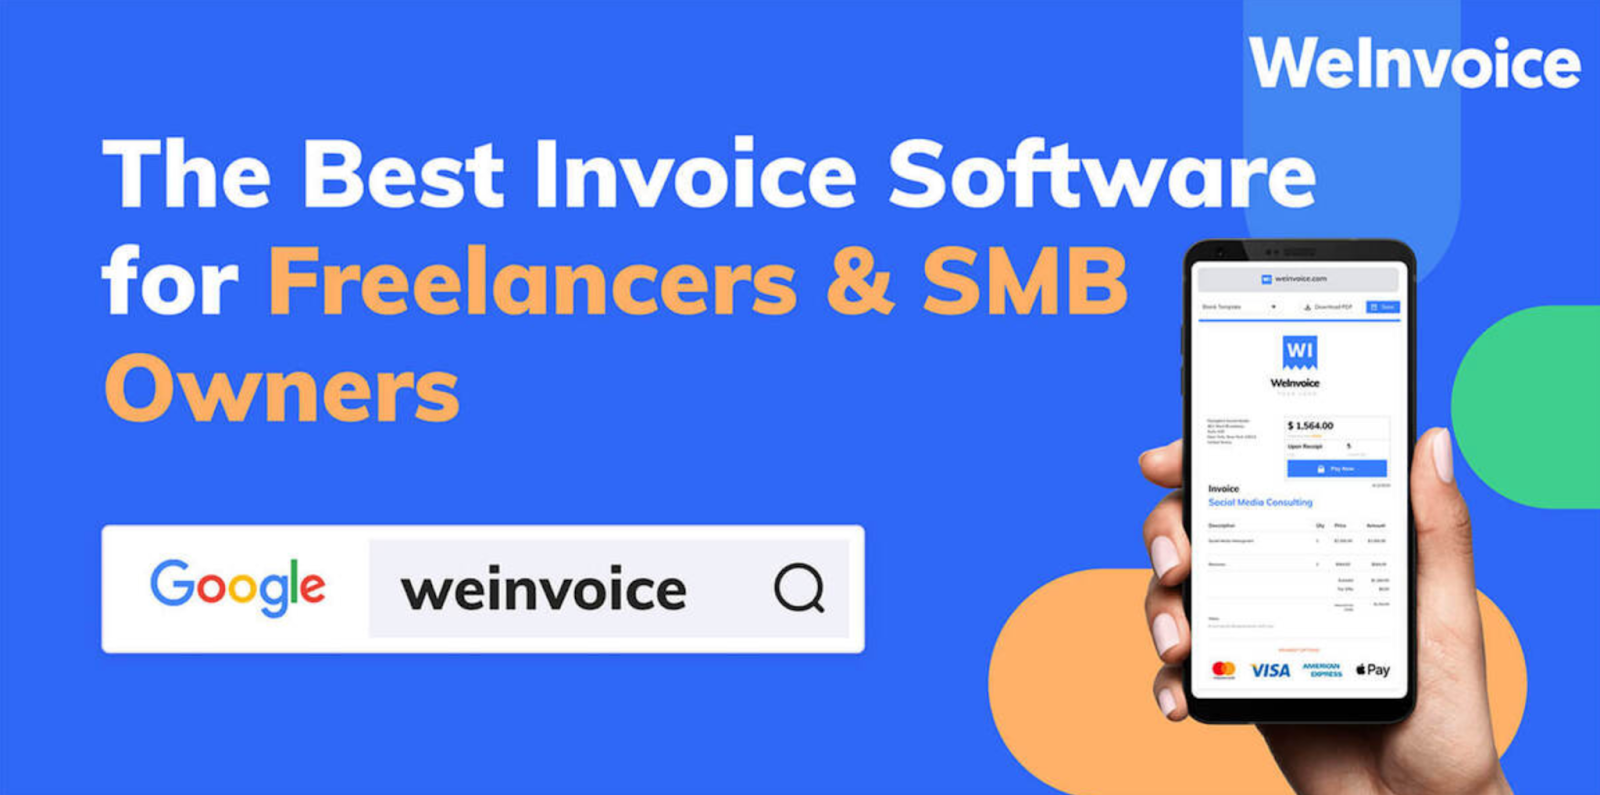 weinvoice-software